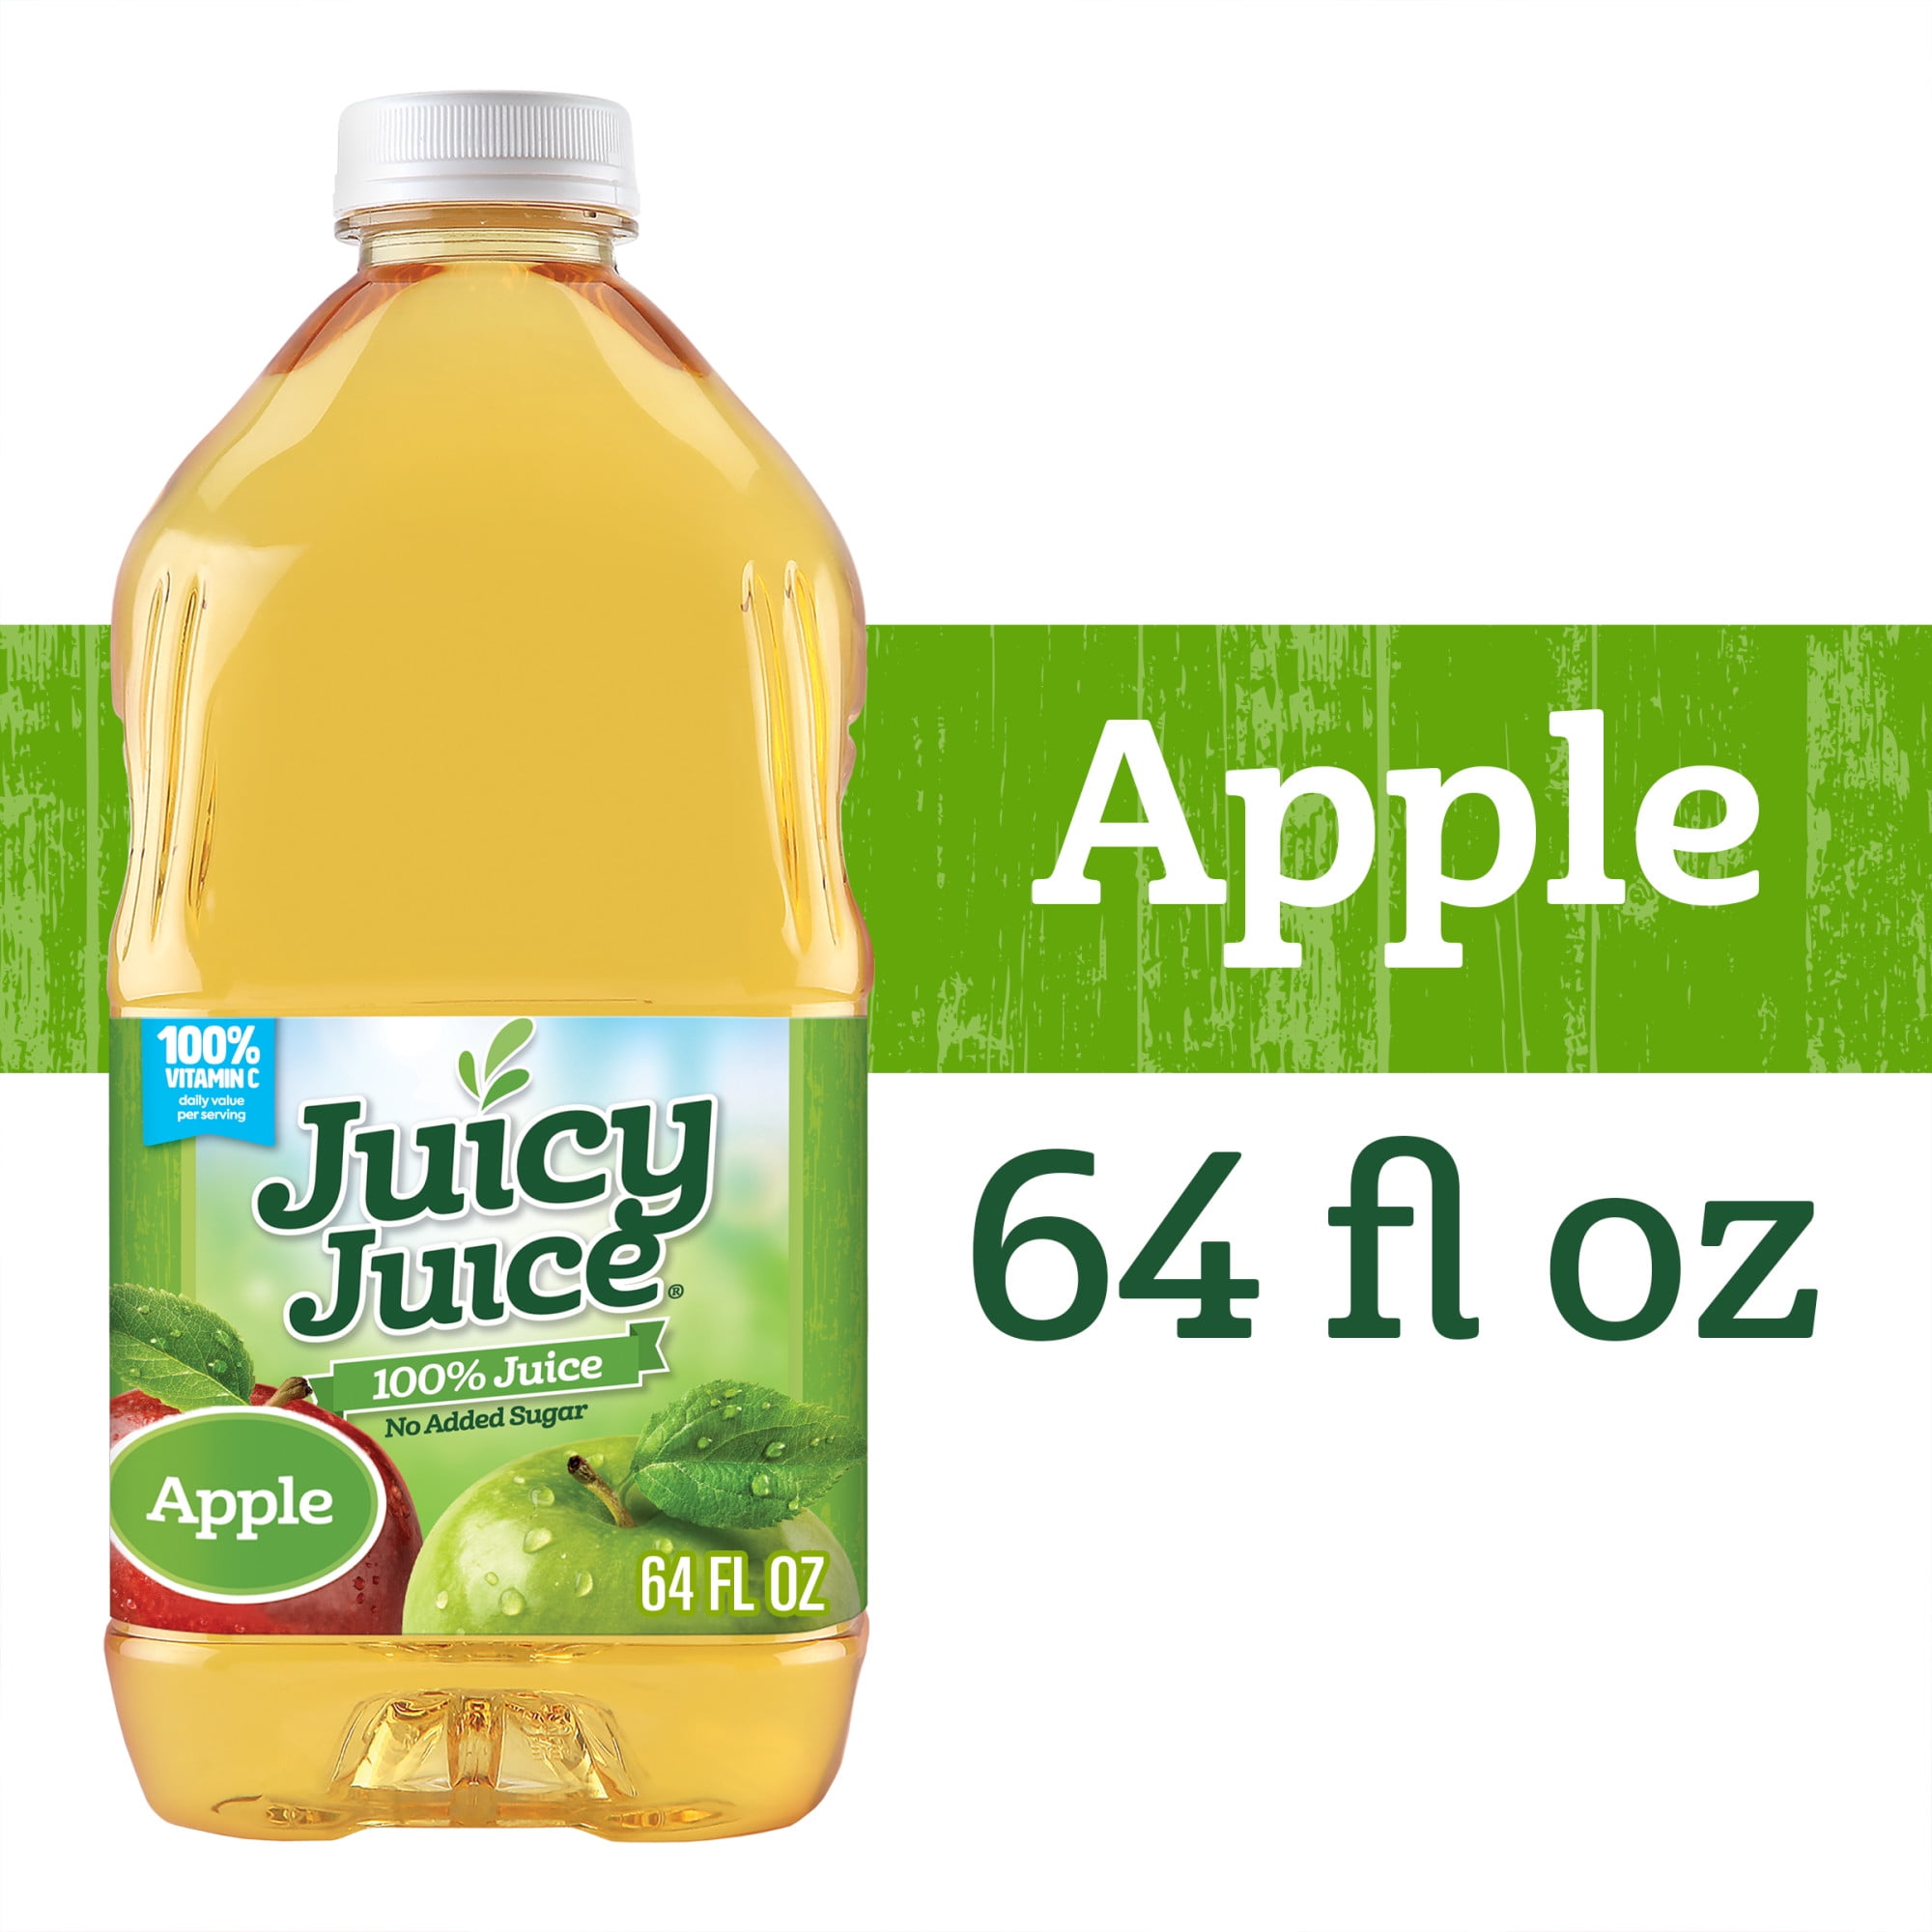 Juicy Juice 100% Juice, Apple, 64 FL OZ Bottle 